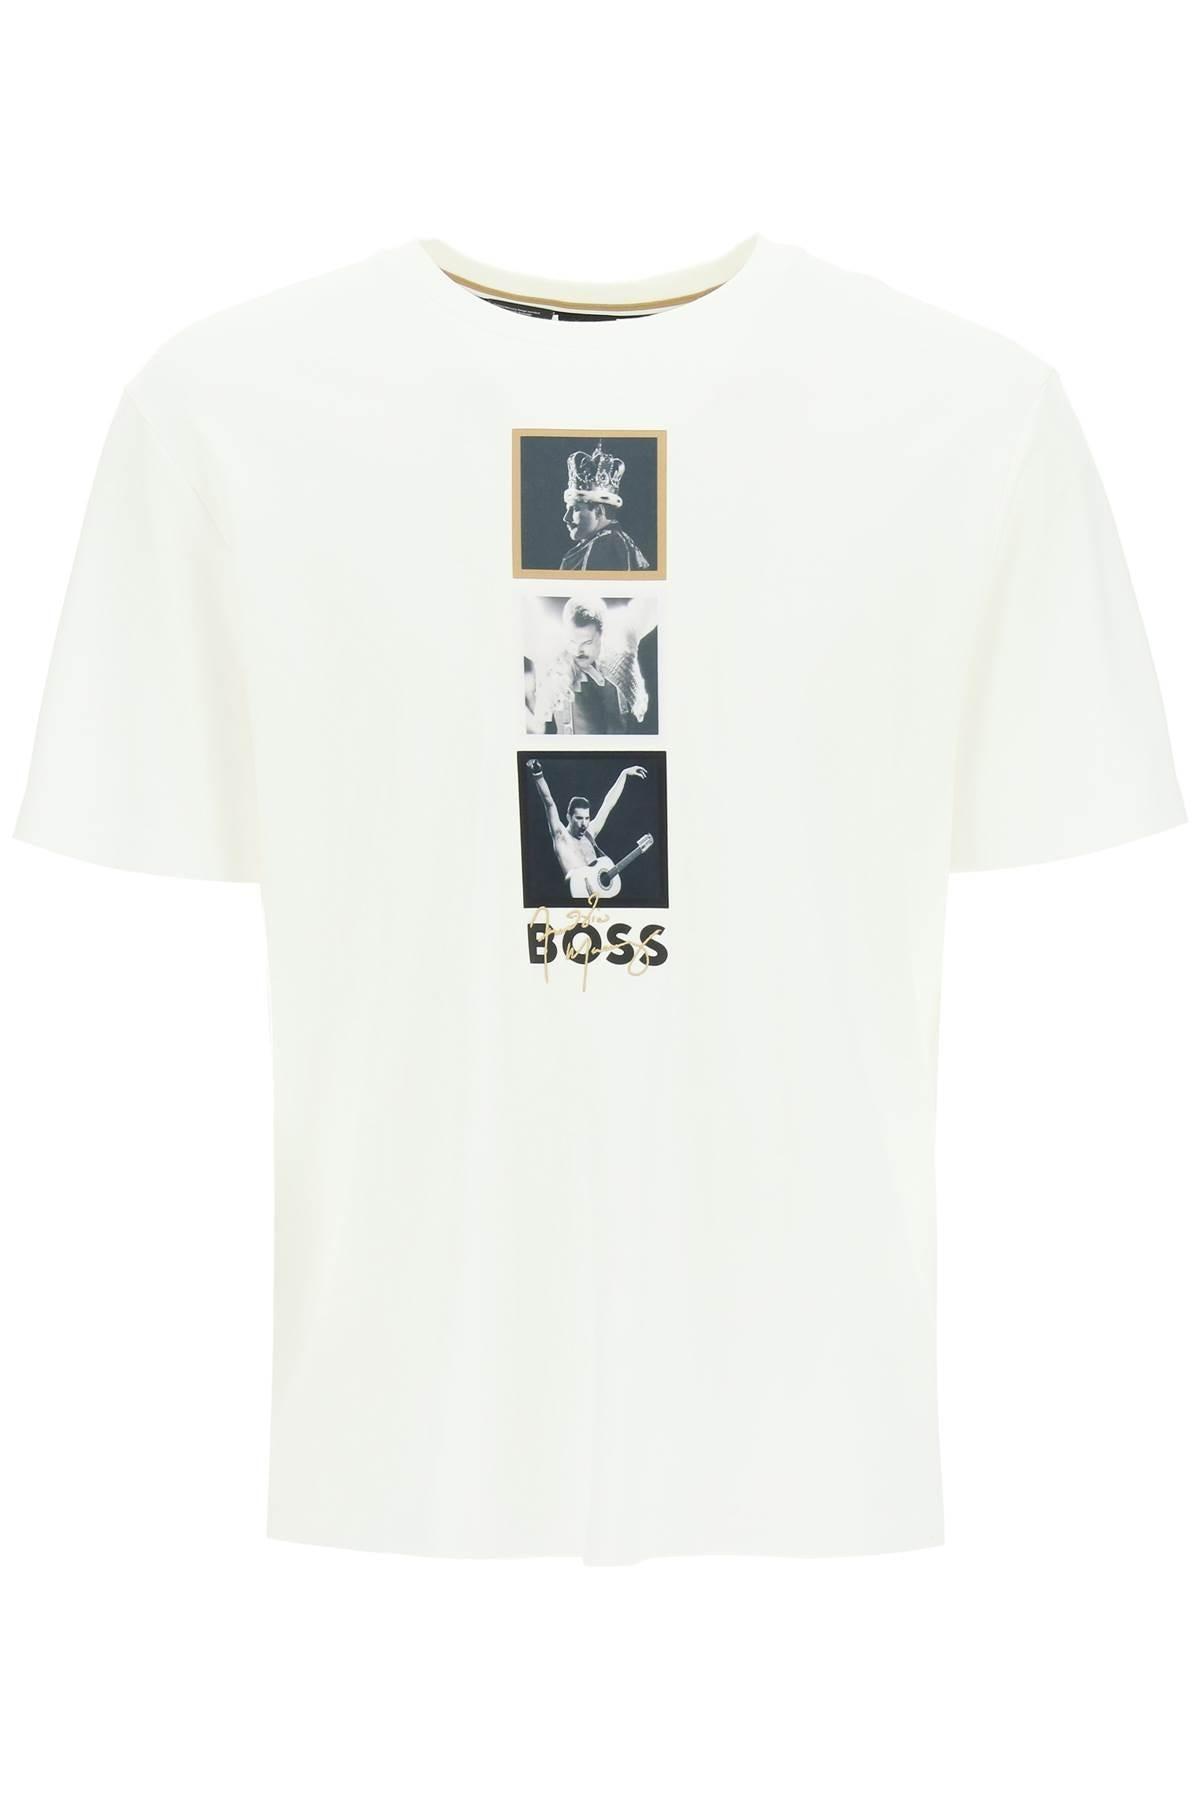 BOSS by HUGO BOSS T Freddie Freddie Mercury T Shirt in White for Men | Lyst